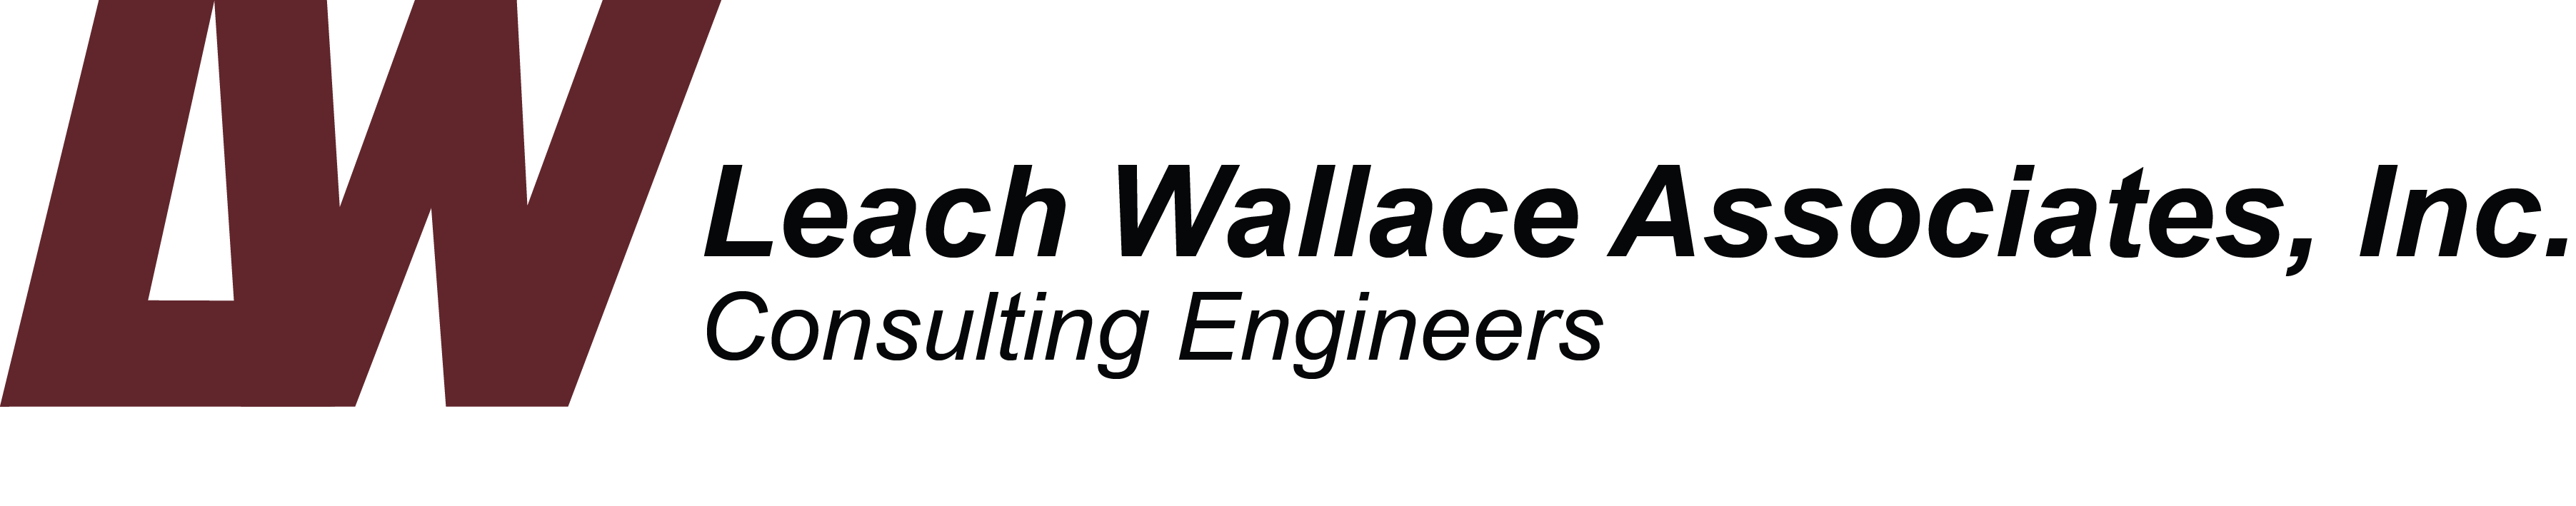 Leach Wallace Associates, Inc.